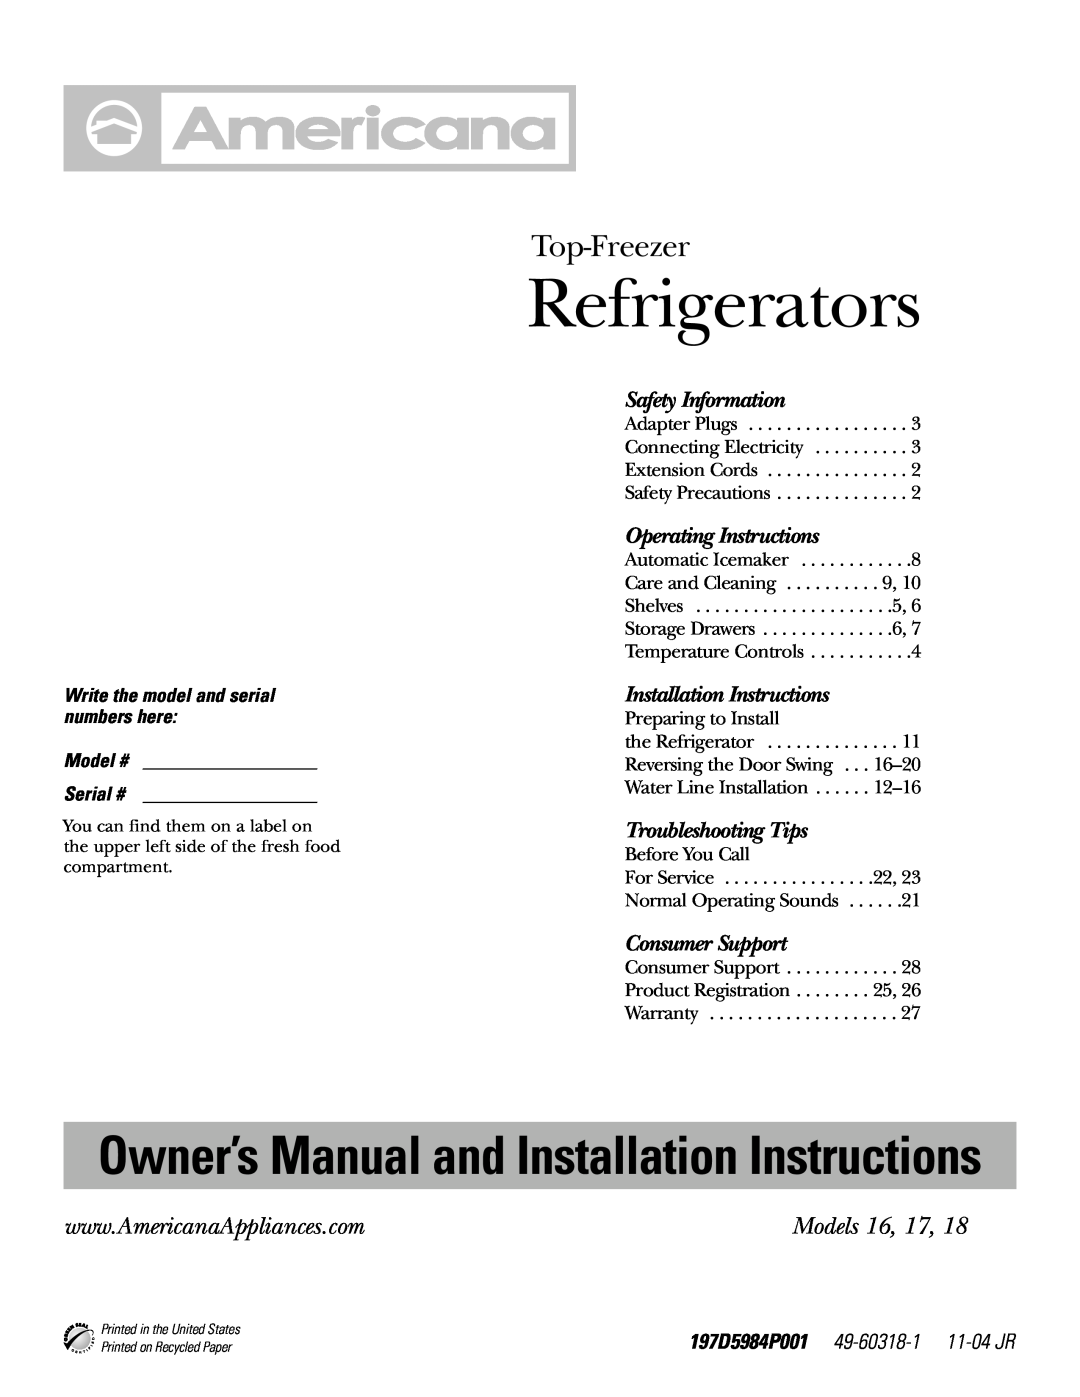 Americana Appliances 18 installation instructions Refrigerators, Top-Freezer, Models 16, 17, Safety Information 